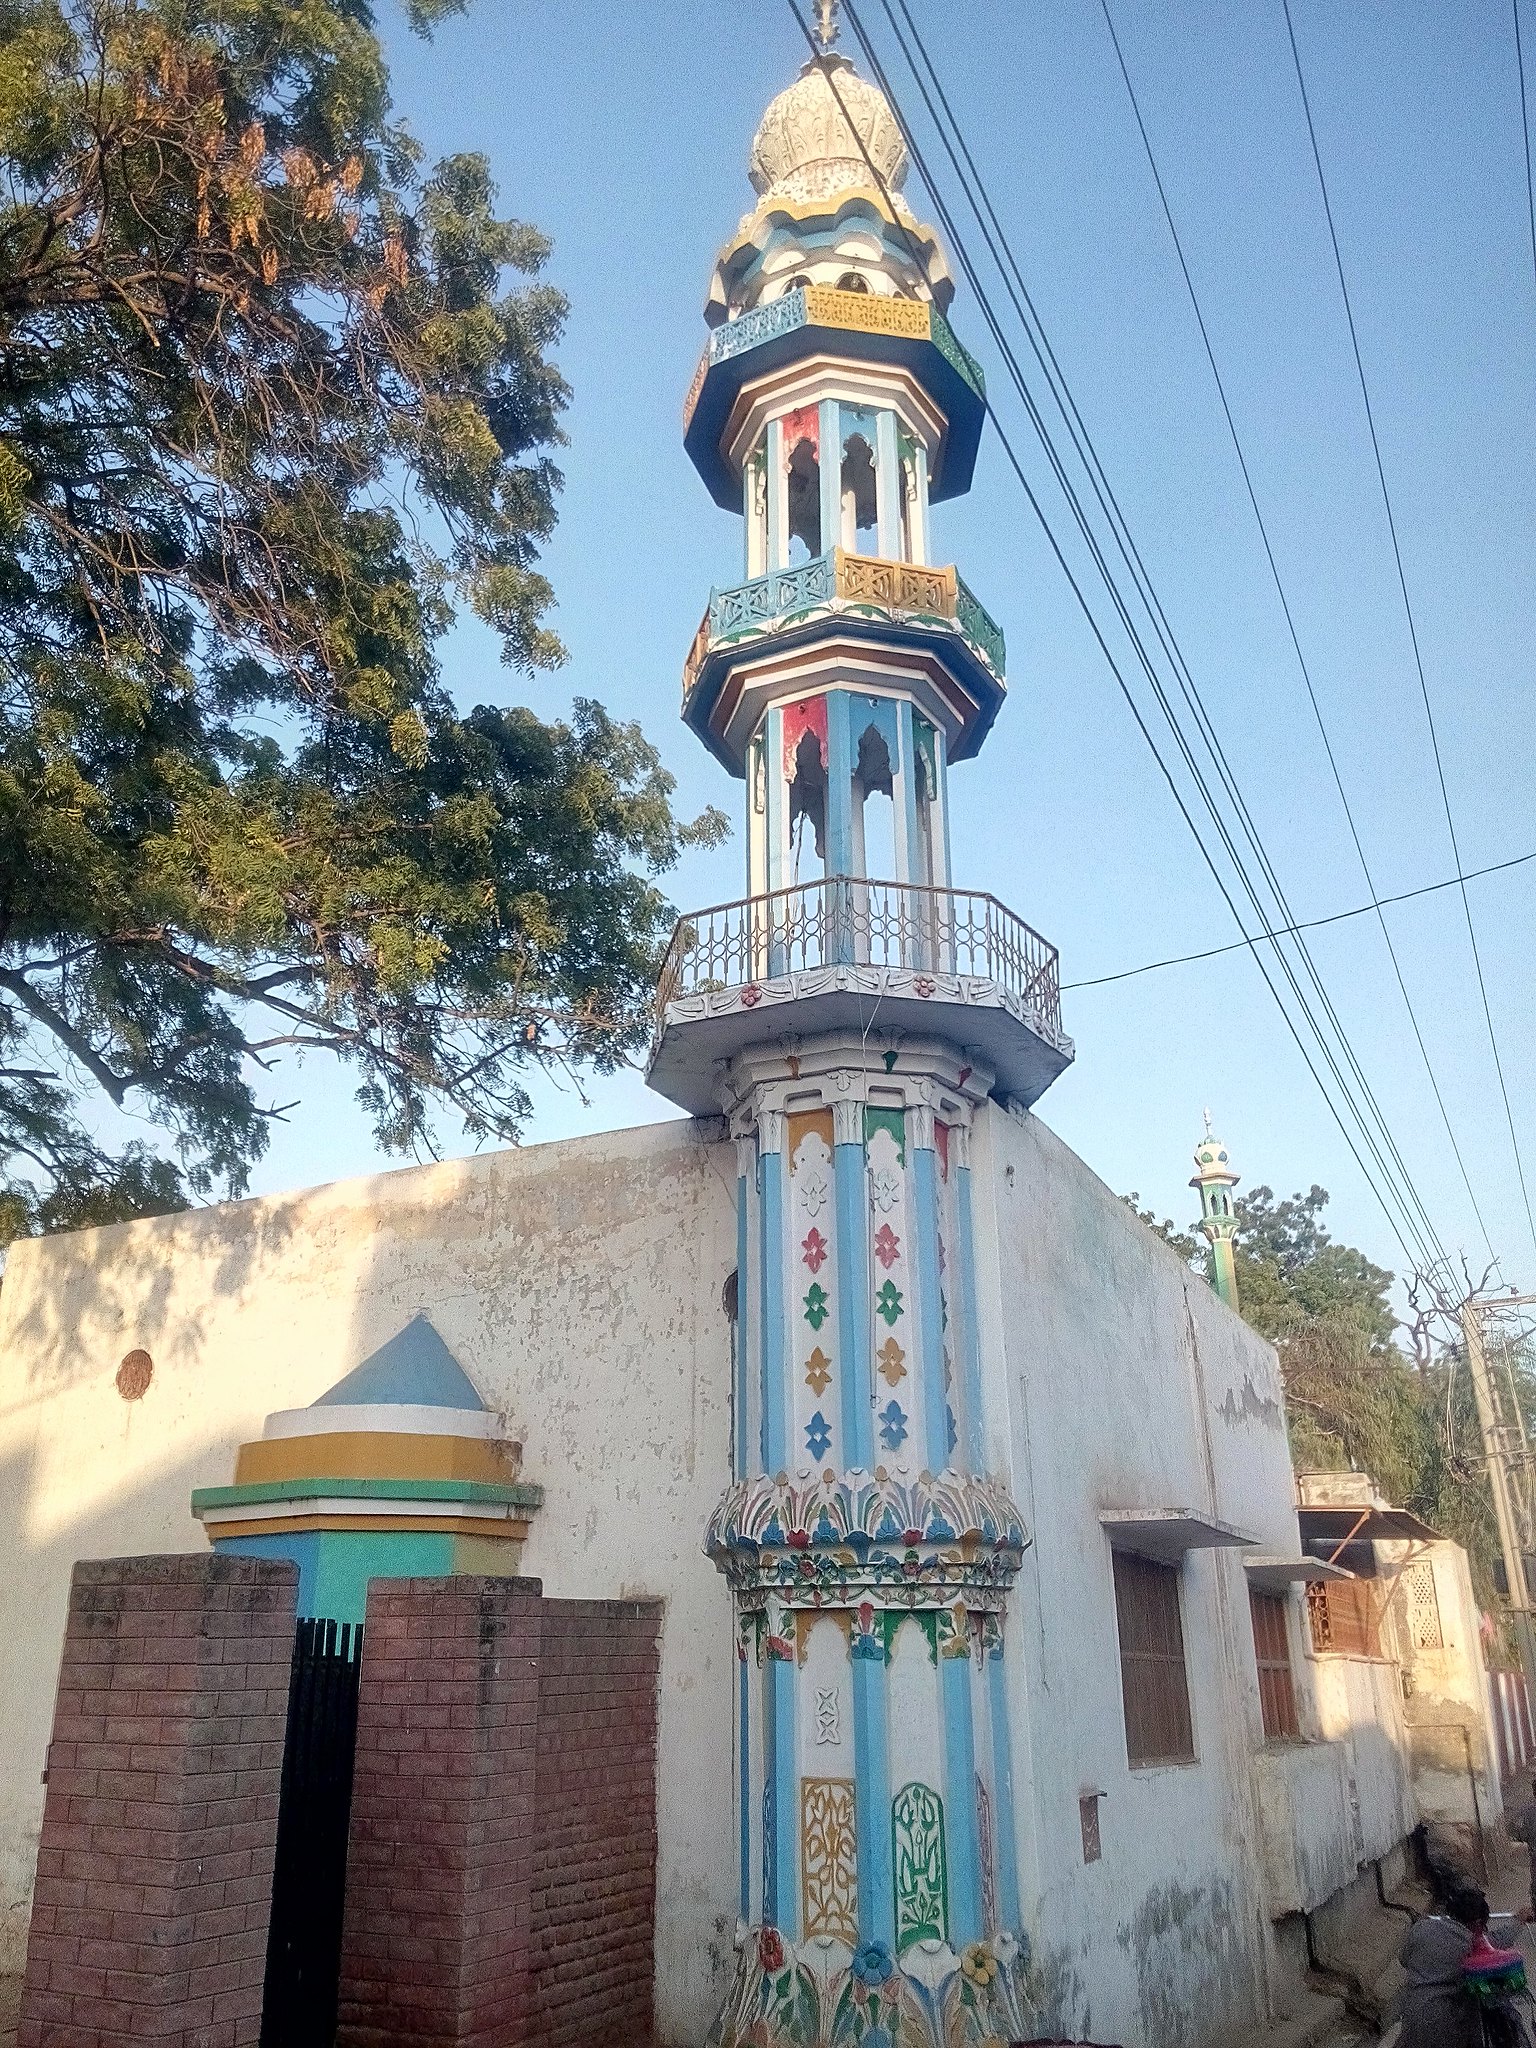 Colorful minaret